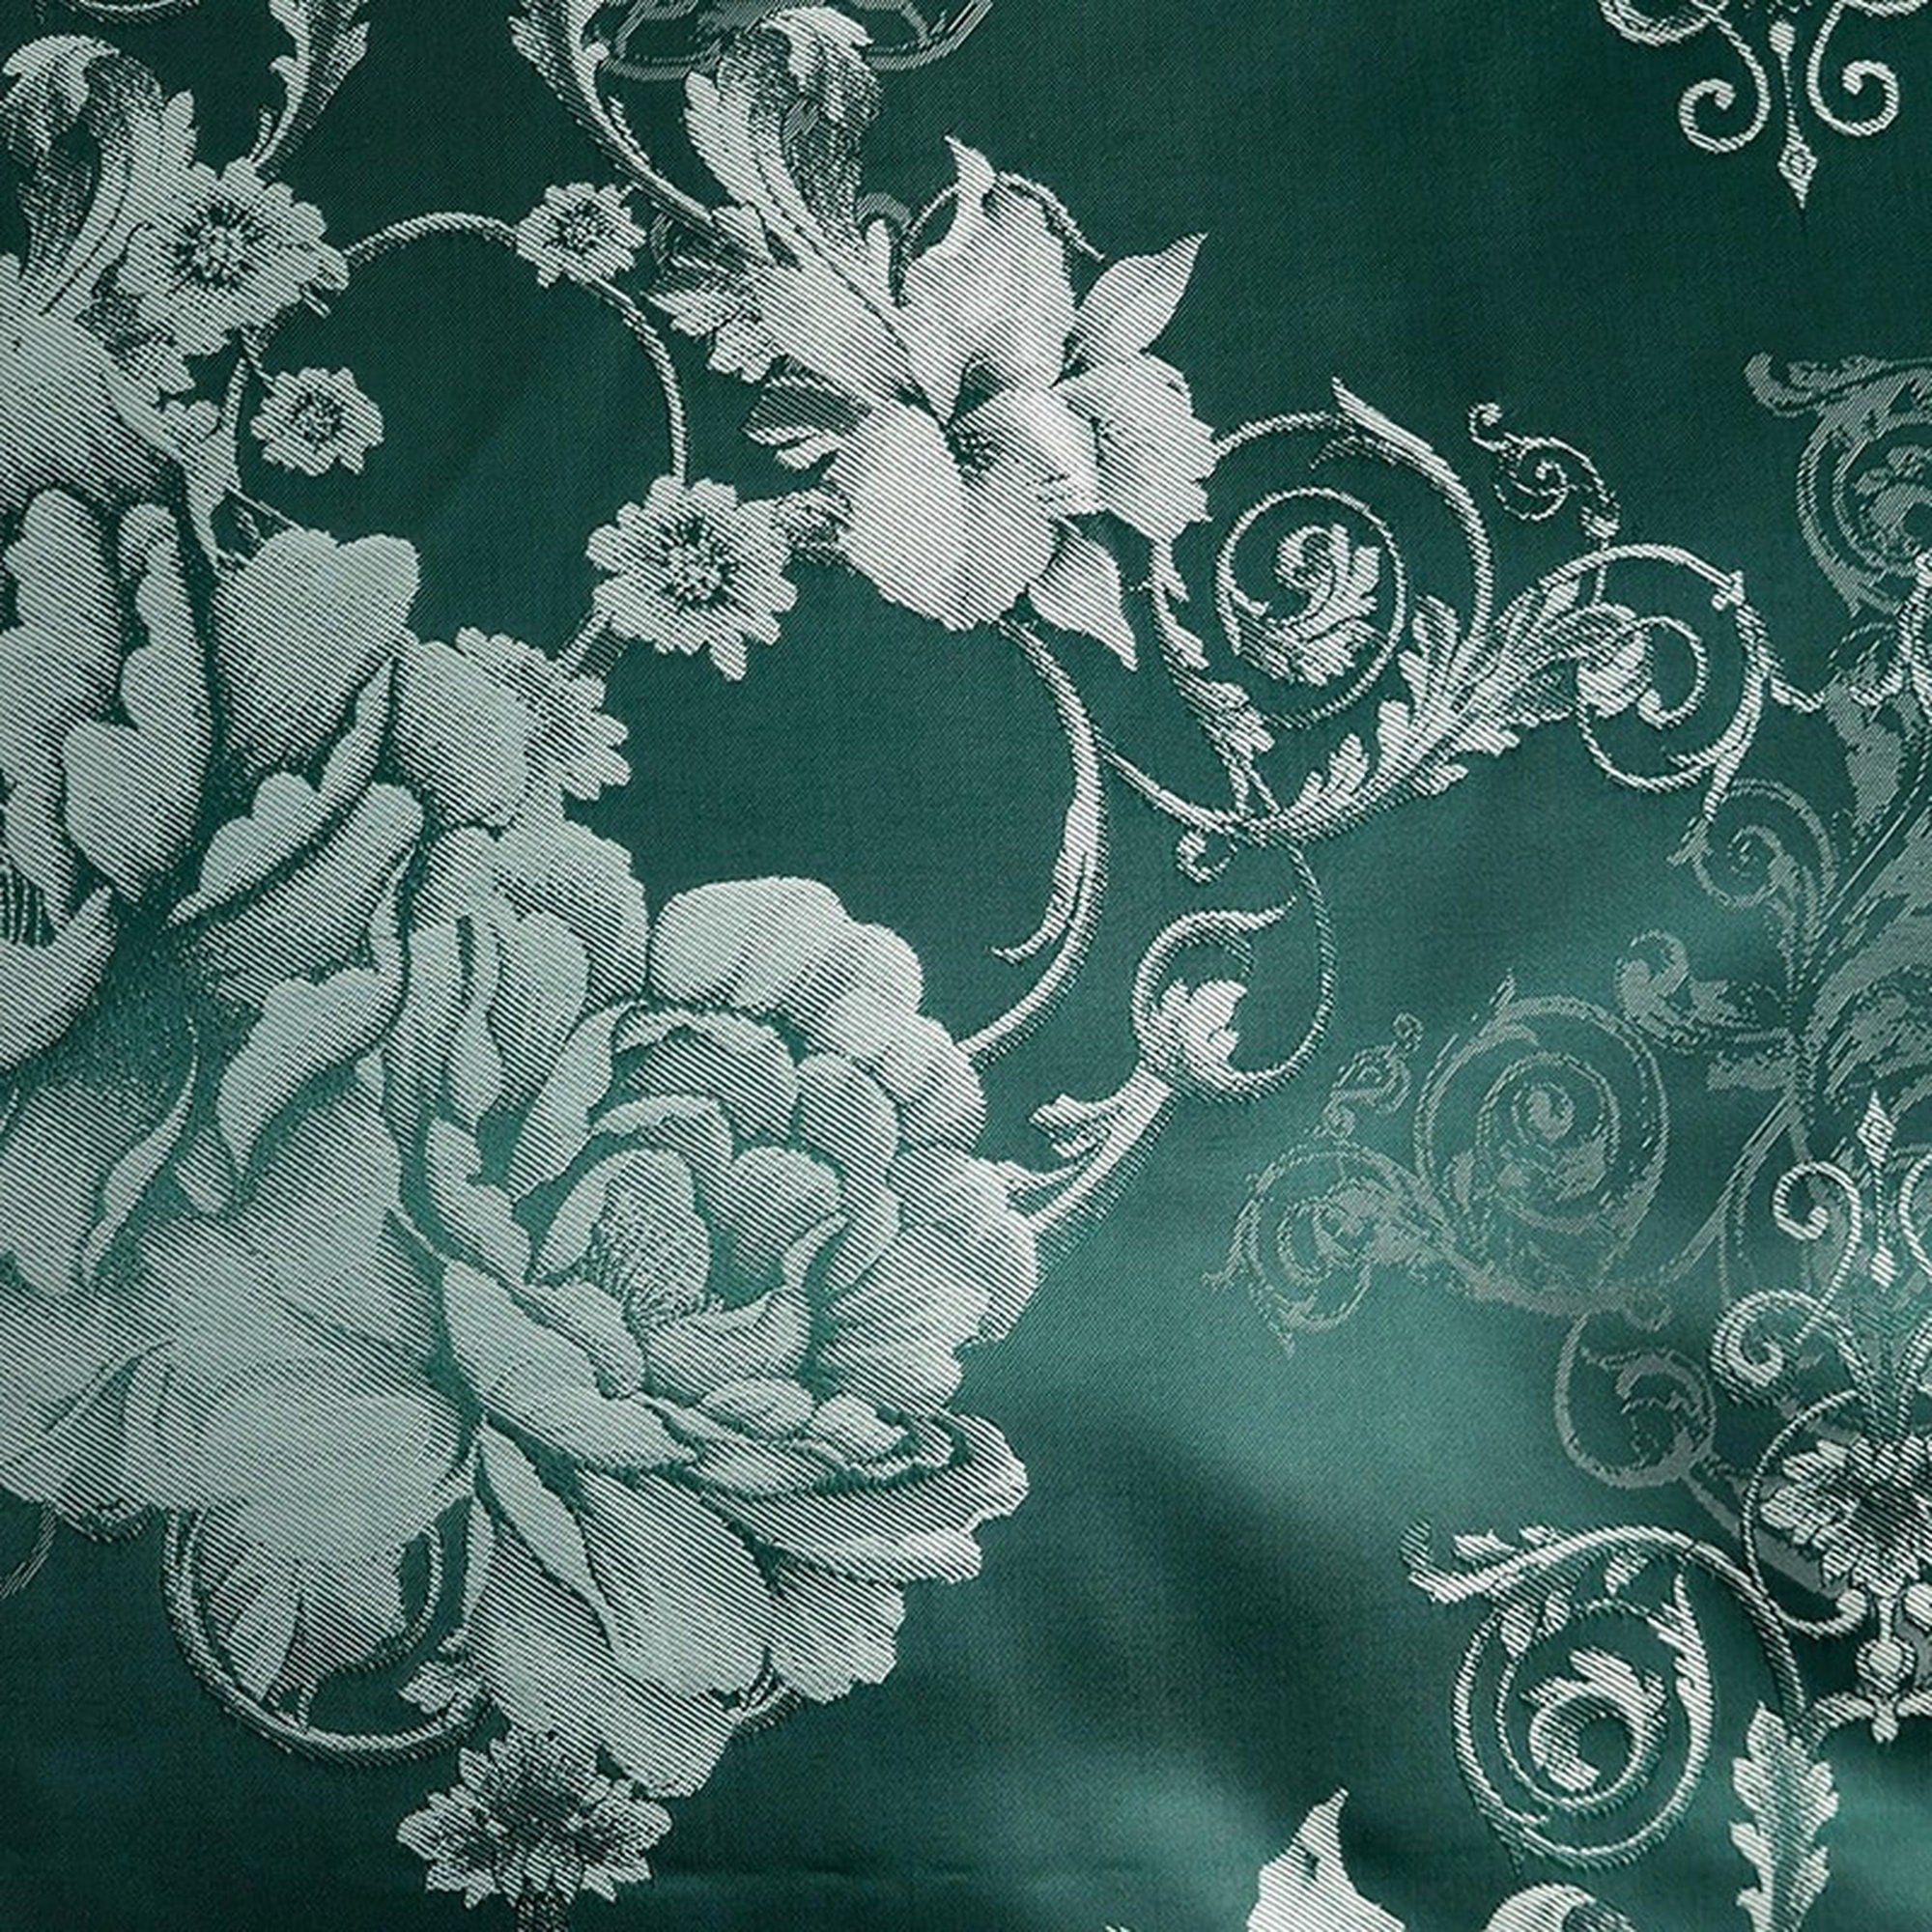 daintyduvet Jade Green Luxury Bedding made with Silky Jacquard Fabric, Damask Duvet Cover Set, Designer Bedding, Aesthetic Duvet King Queen Full Twin